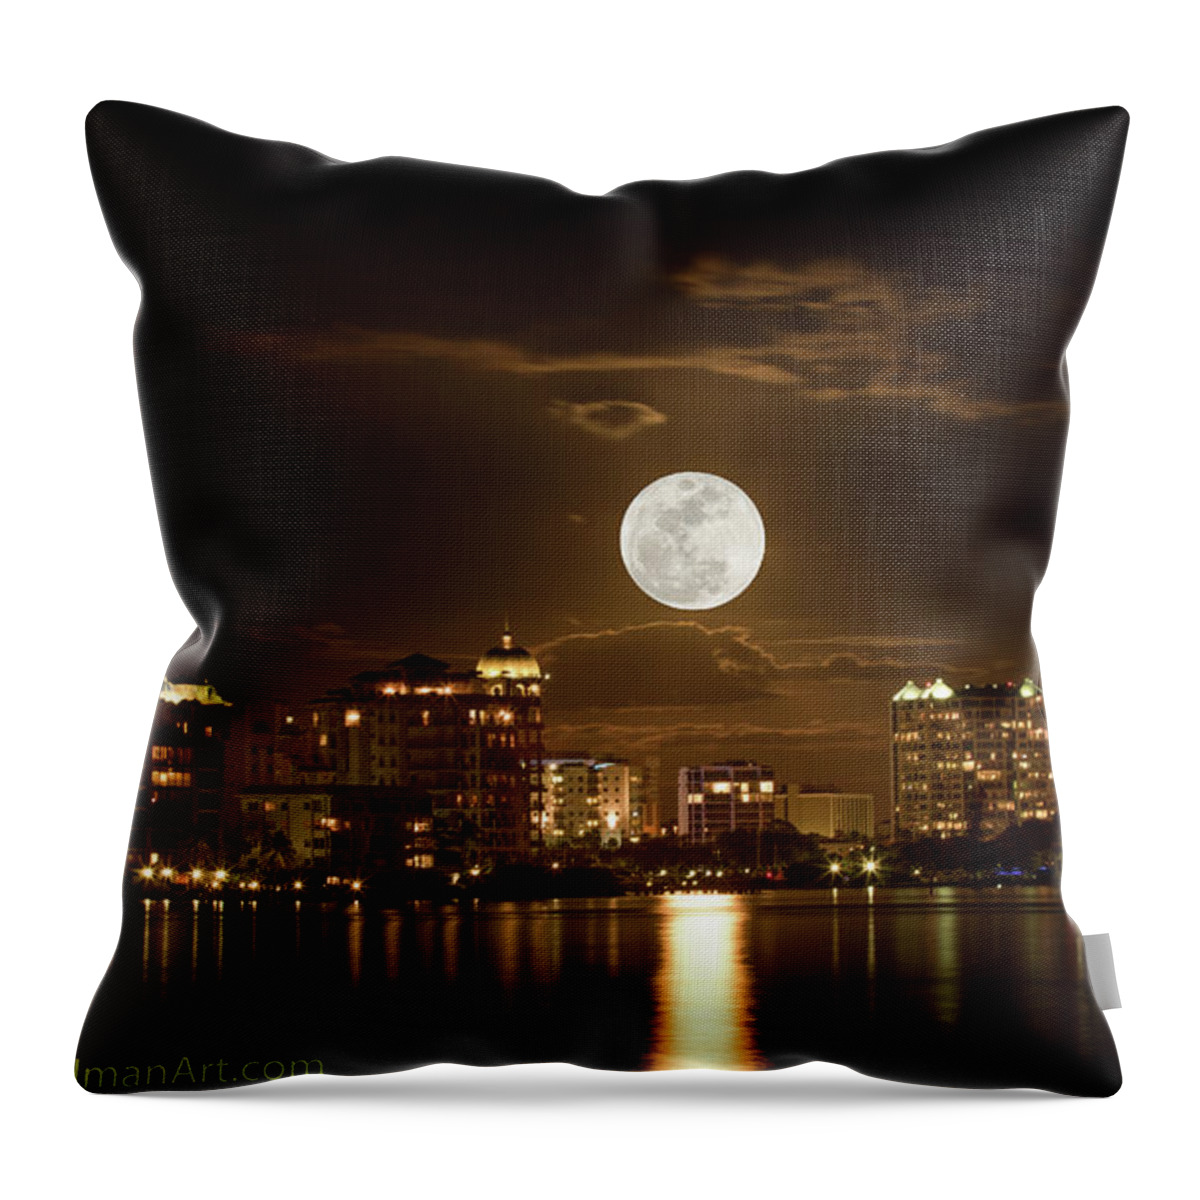 Moonrise Shoot Throw Pillow featuring the photograph Full Moon Rising Over Sarasota by Richard Goldman